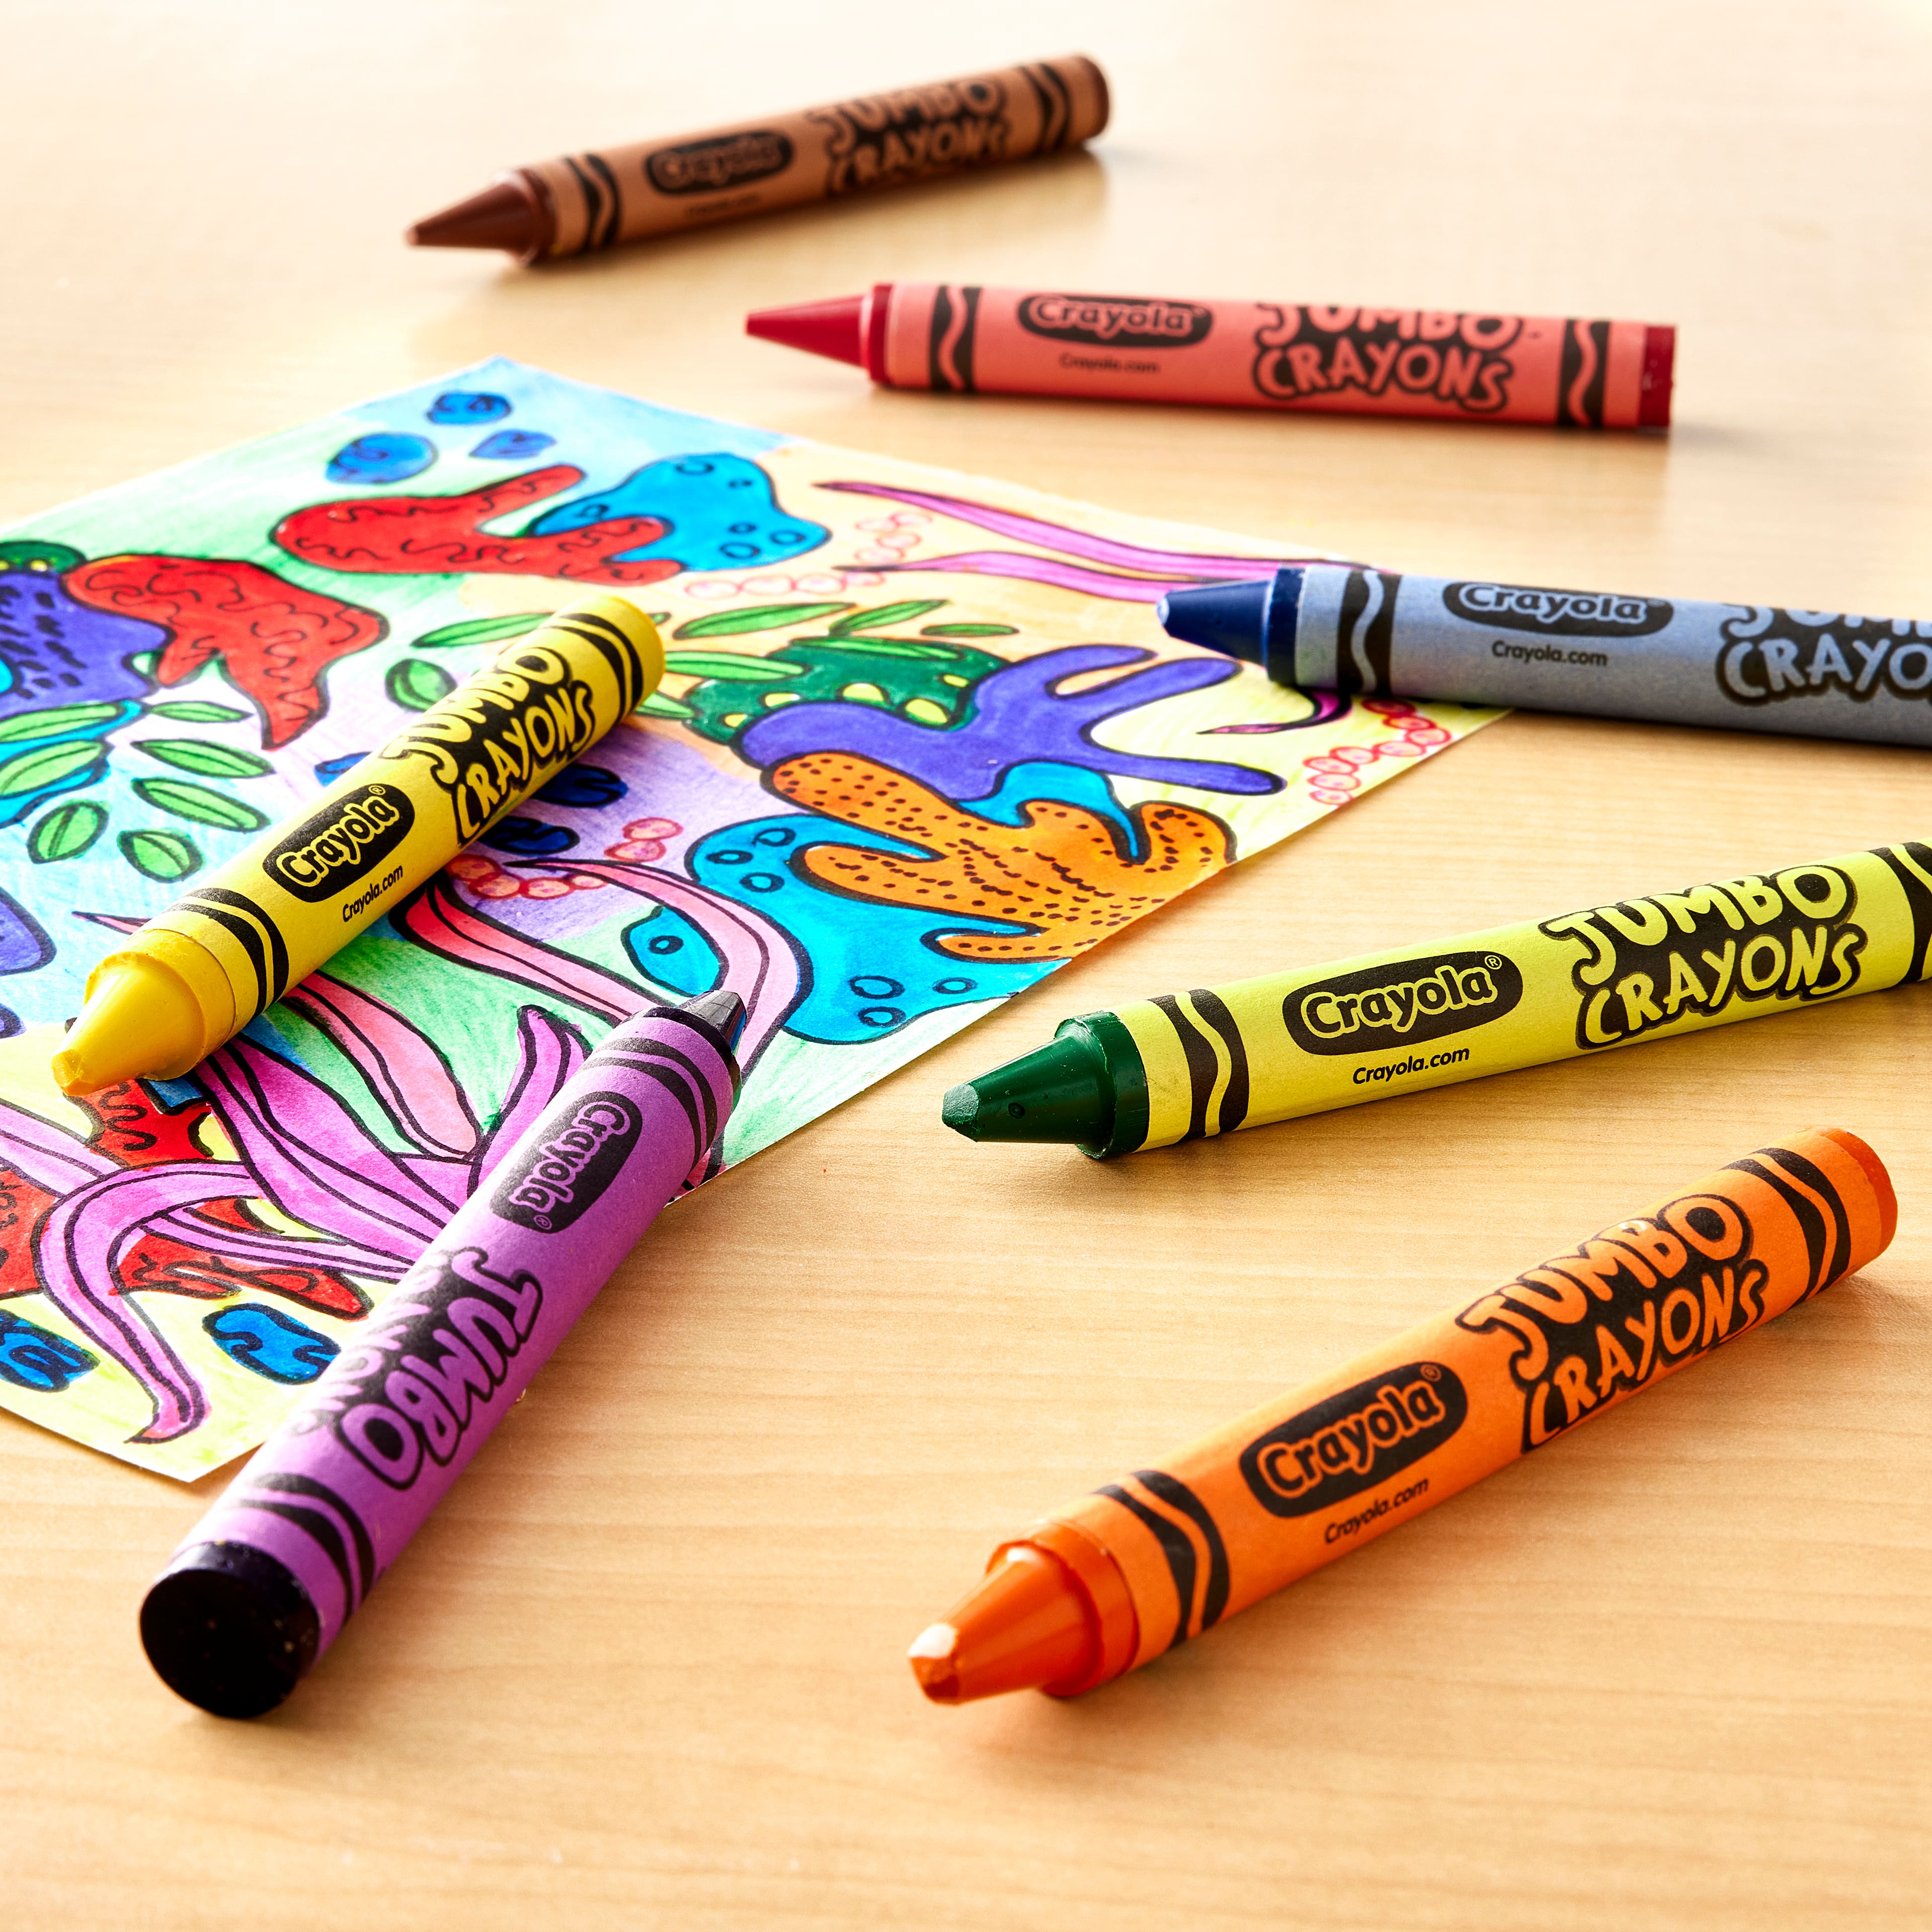 Crayola Jumbo Crayons, 200 Count, 8 Colors, Crayola.com